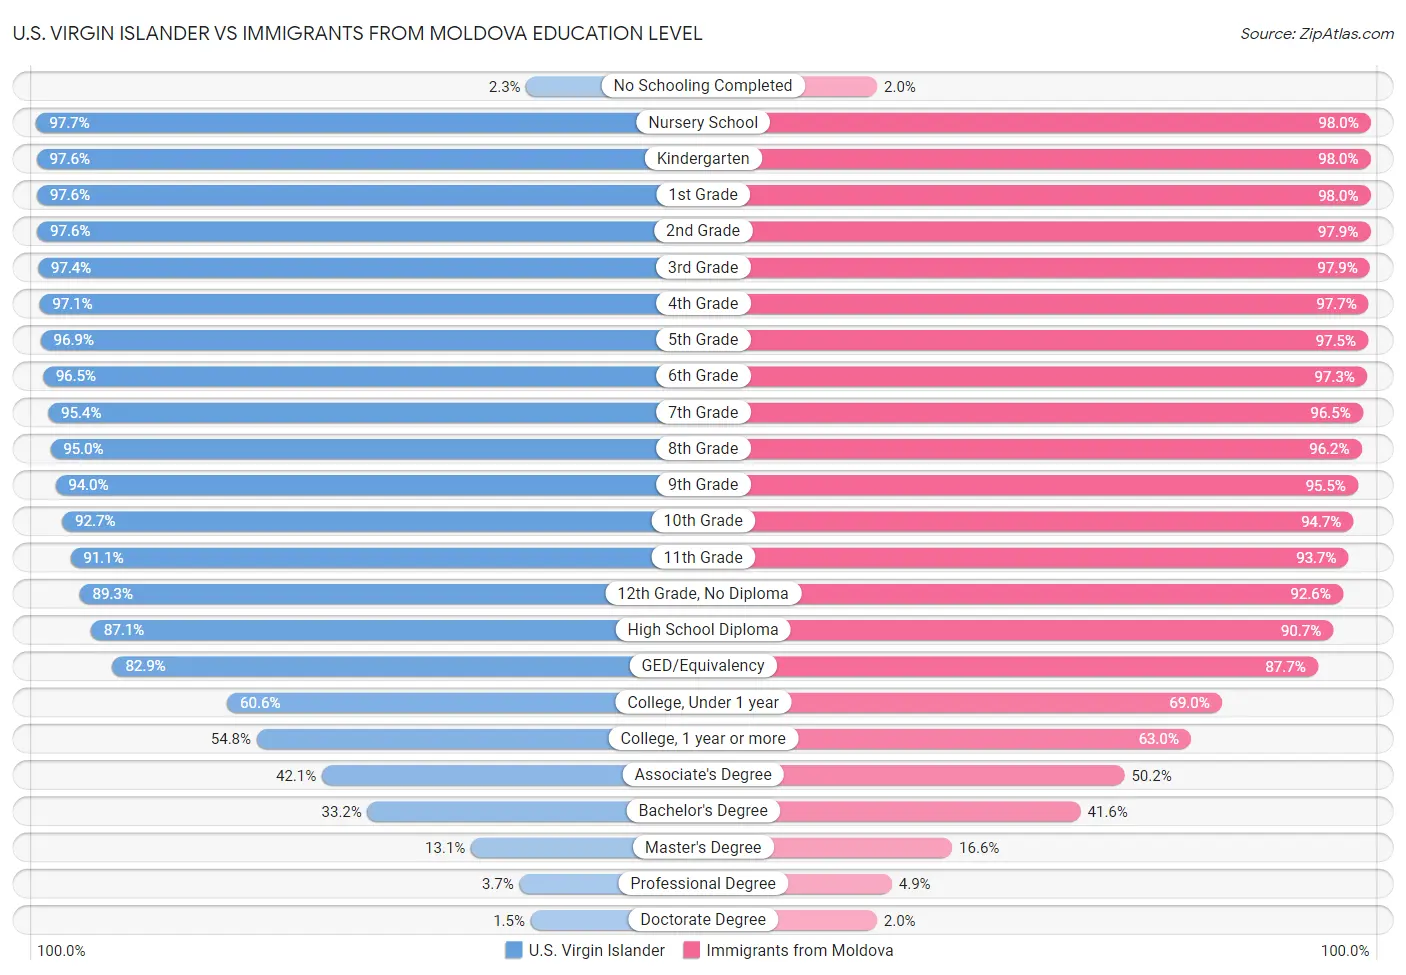 U.S. Virgin Islander vs Immigrants from Moldova Education Level